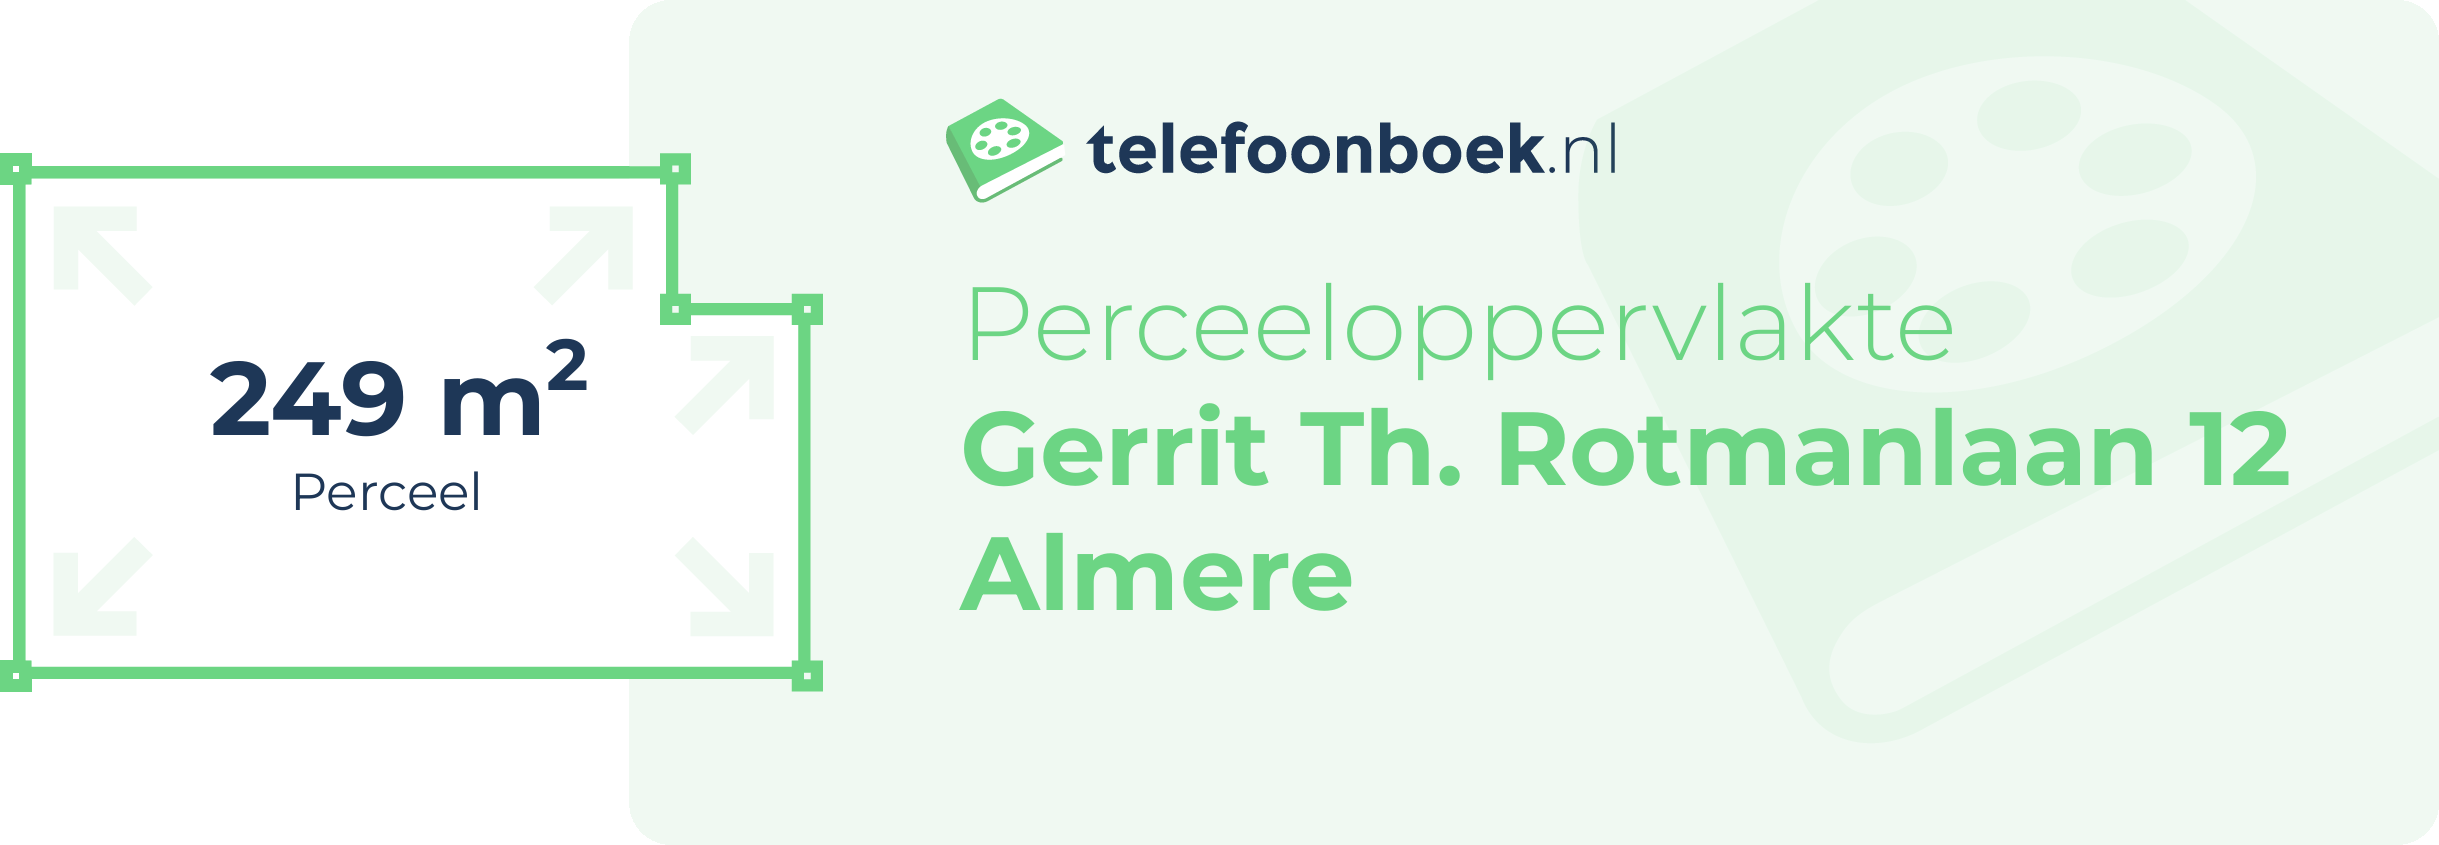 Perceeloppervlakte Gerrit Th. Rotmanlaan 12 Almere